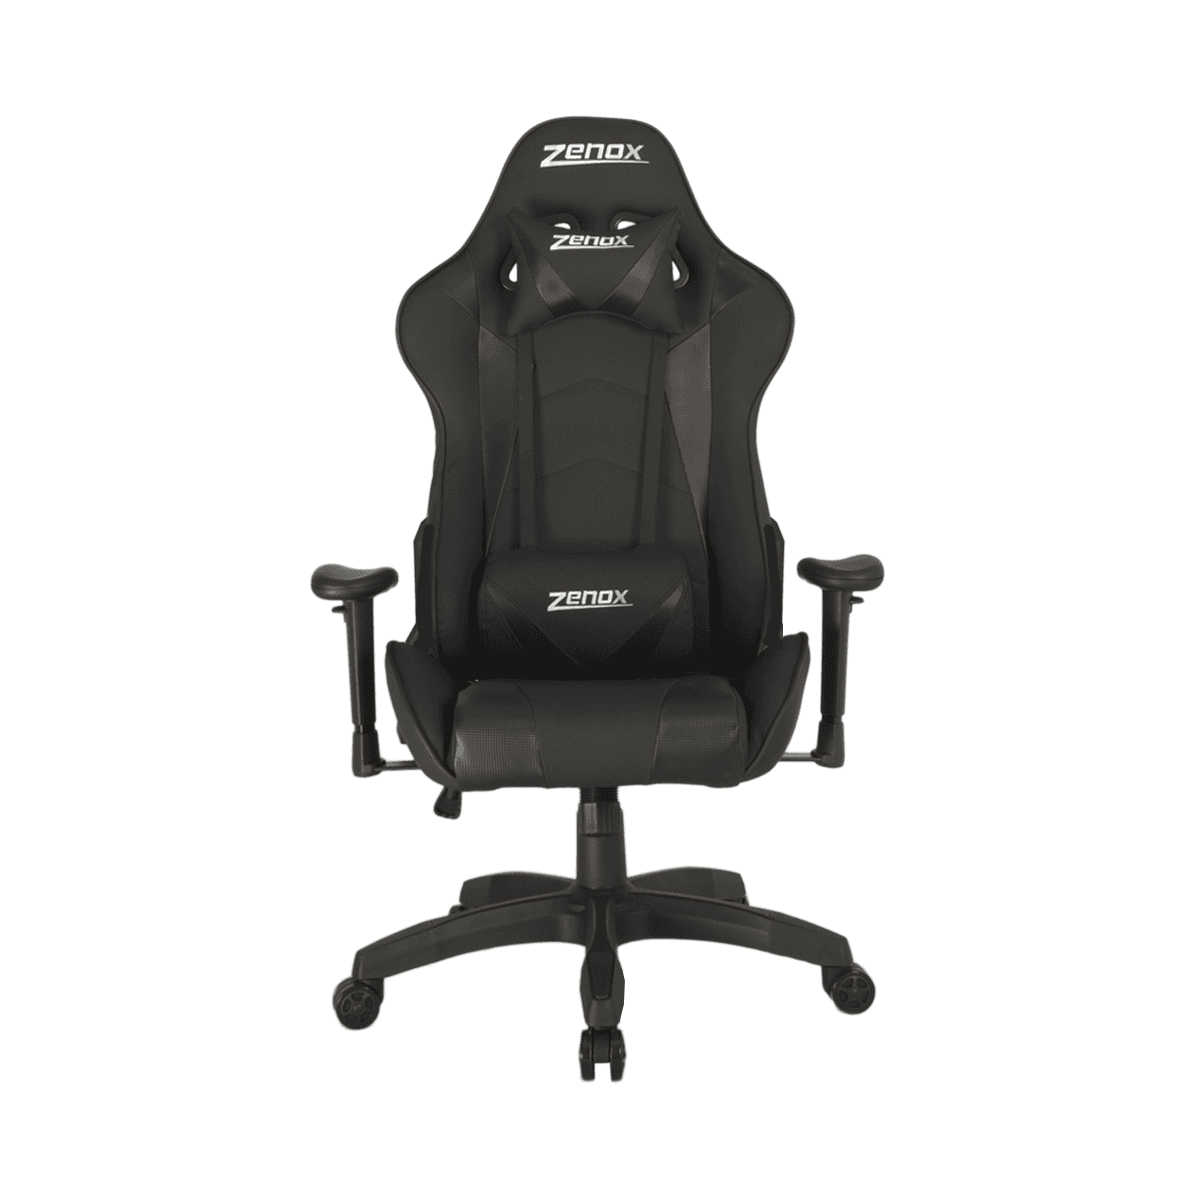 Saturn Gaming Chair (Black)